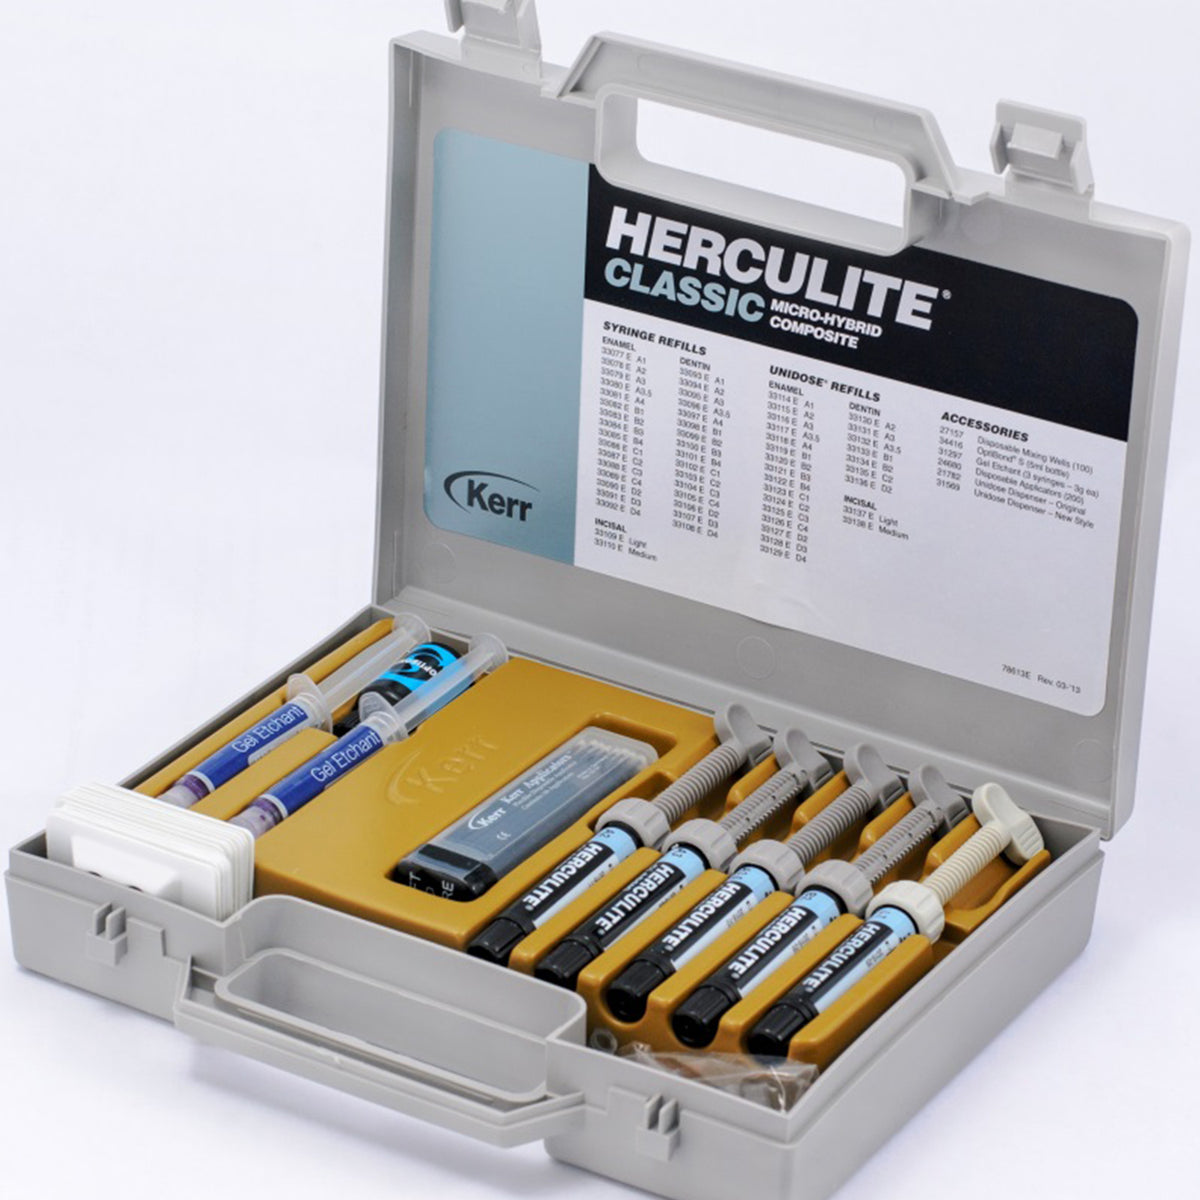 DentrealStore - Kerr Herculite Classic Micro Hibrit Composite Standart Set + 2 Syringe A2 Gift